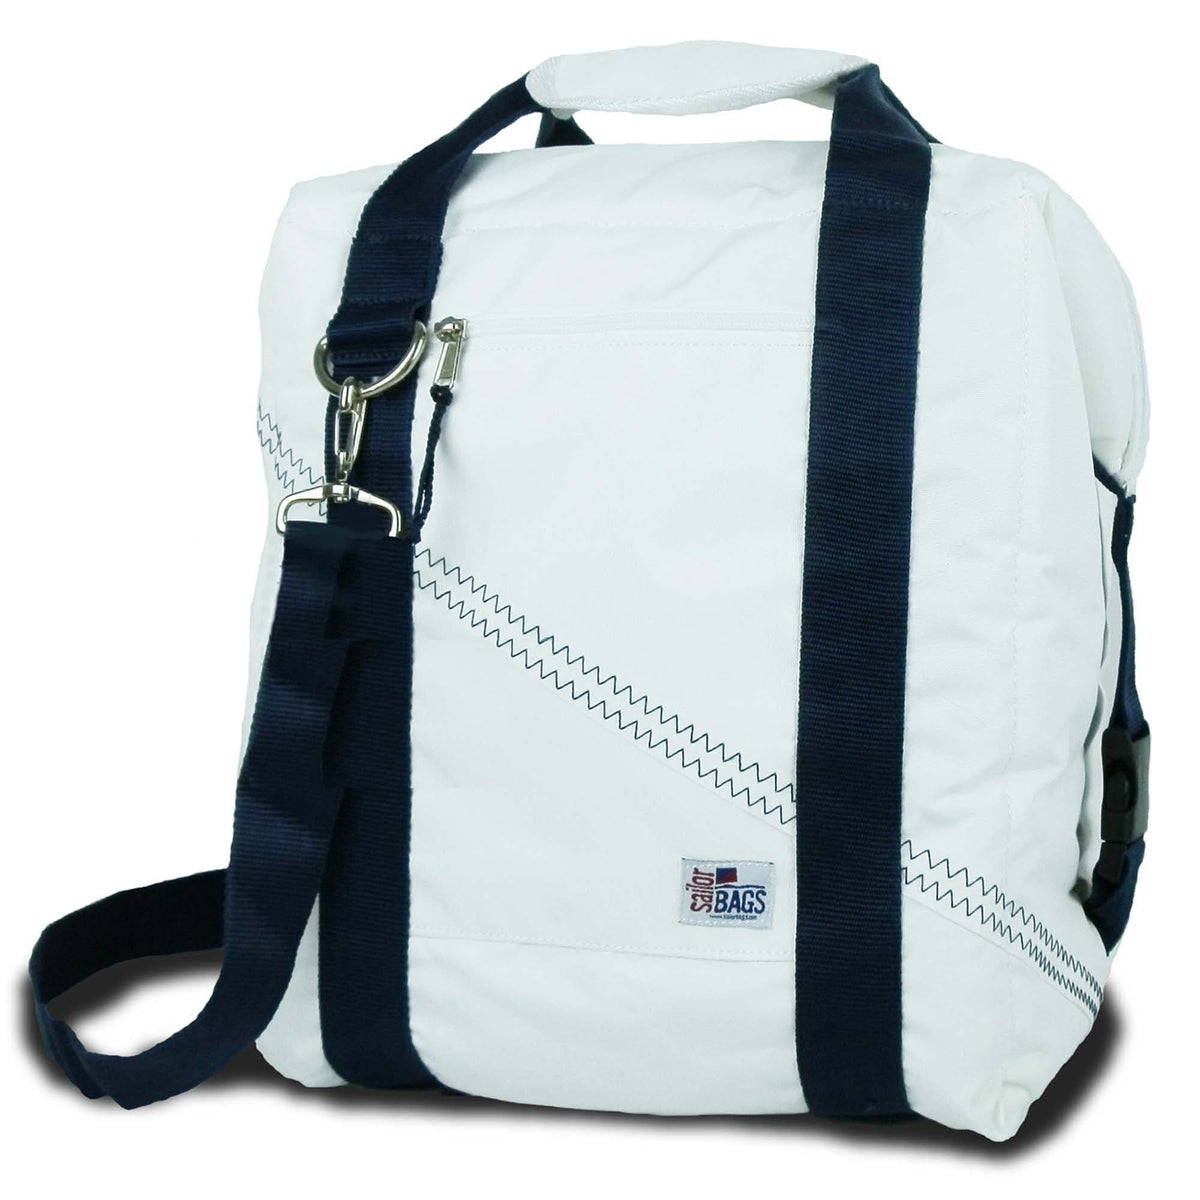 SailorBags Newport 24-Pack Cooler Bag